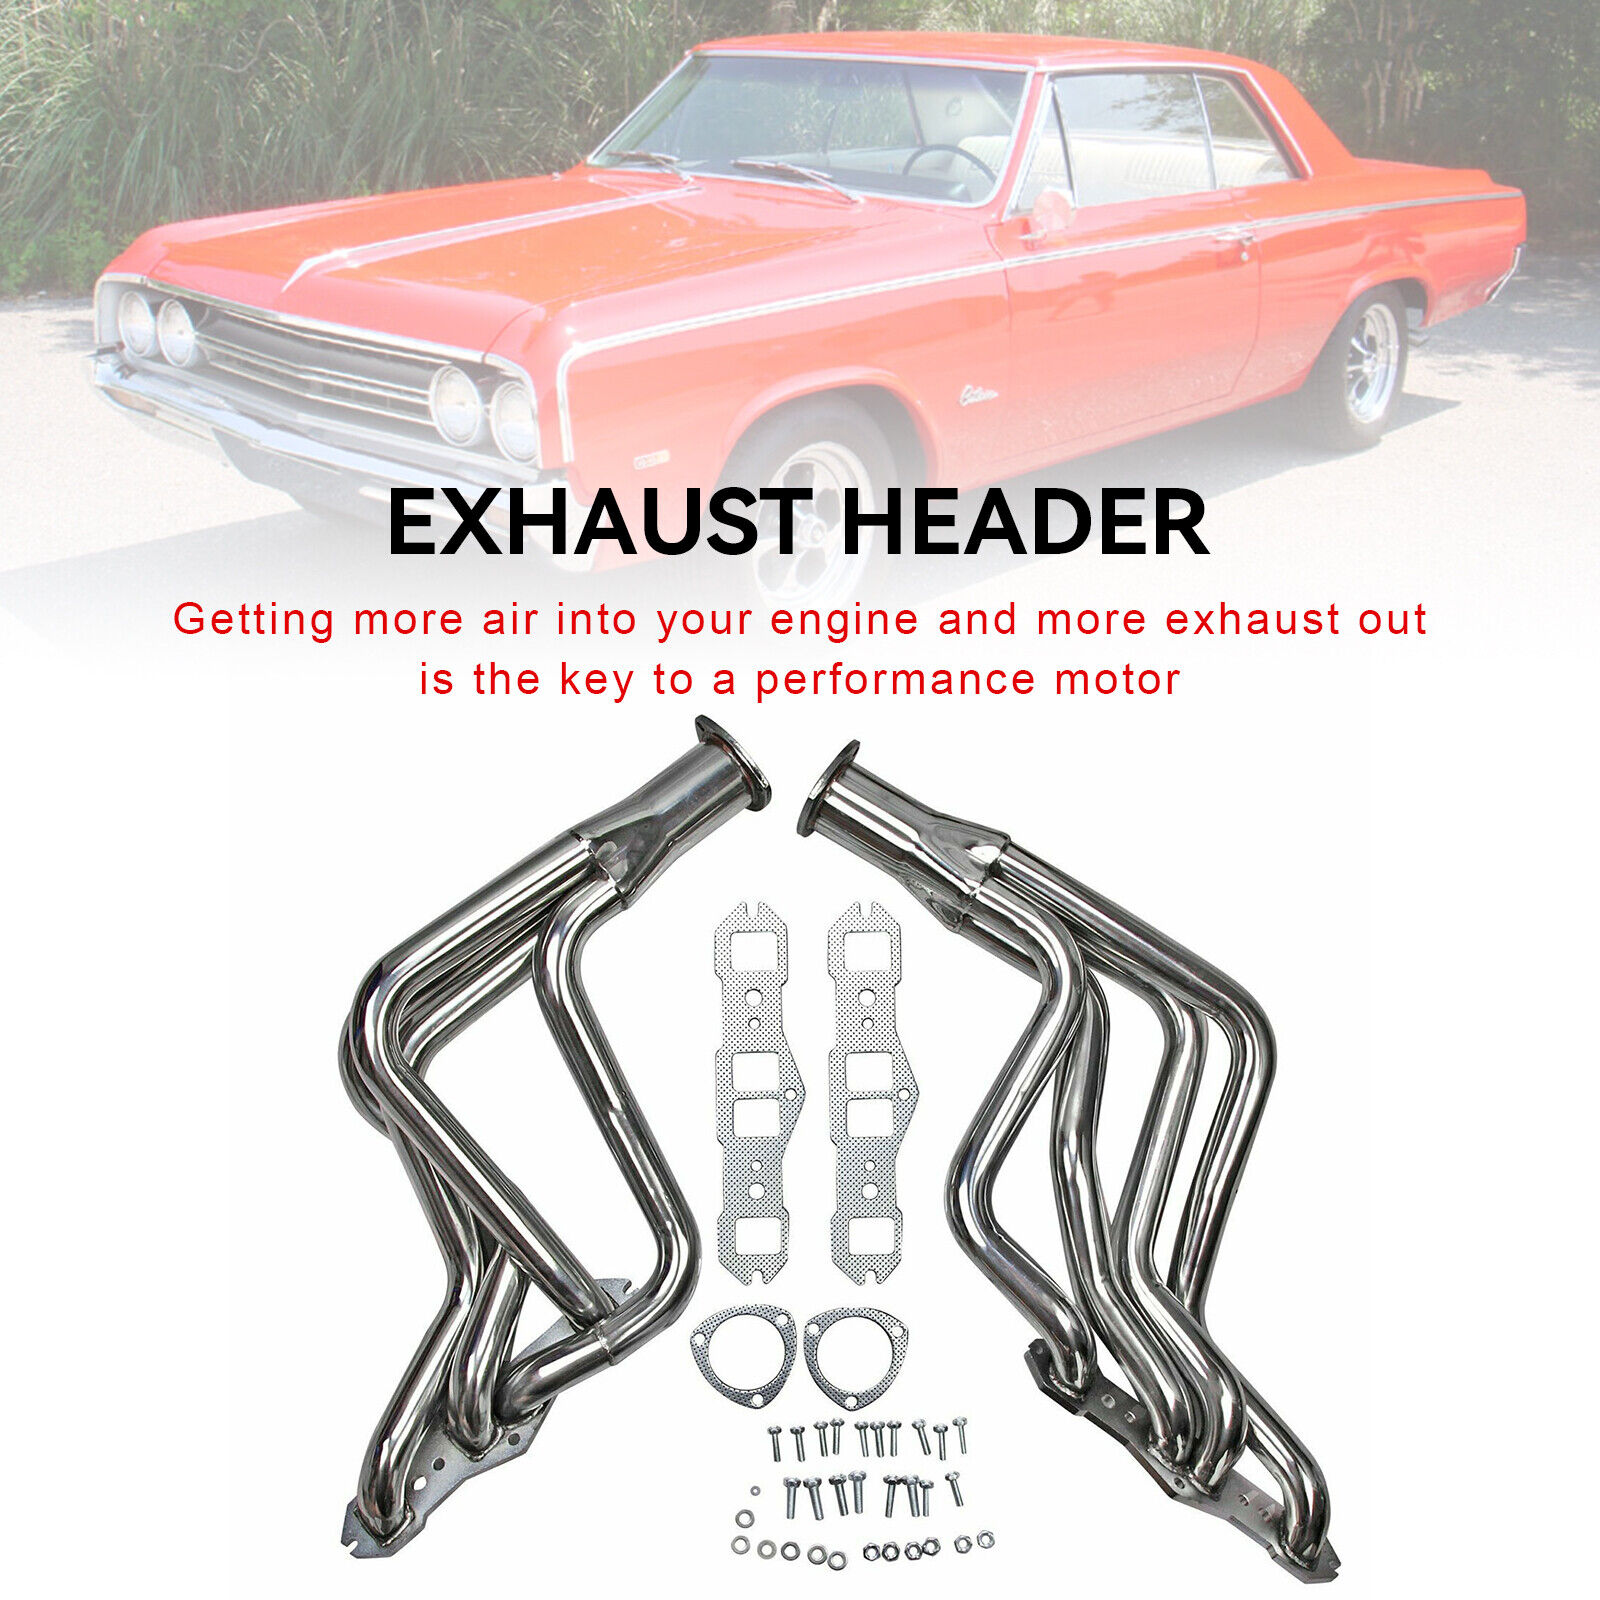 1× Exhaust Header Kit For Oldsmobile Vista Cruiser & Delta 88 & Cutlass & 442 US